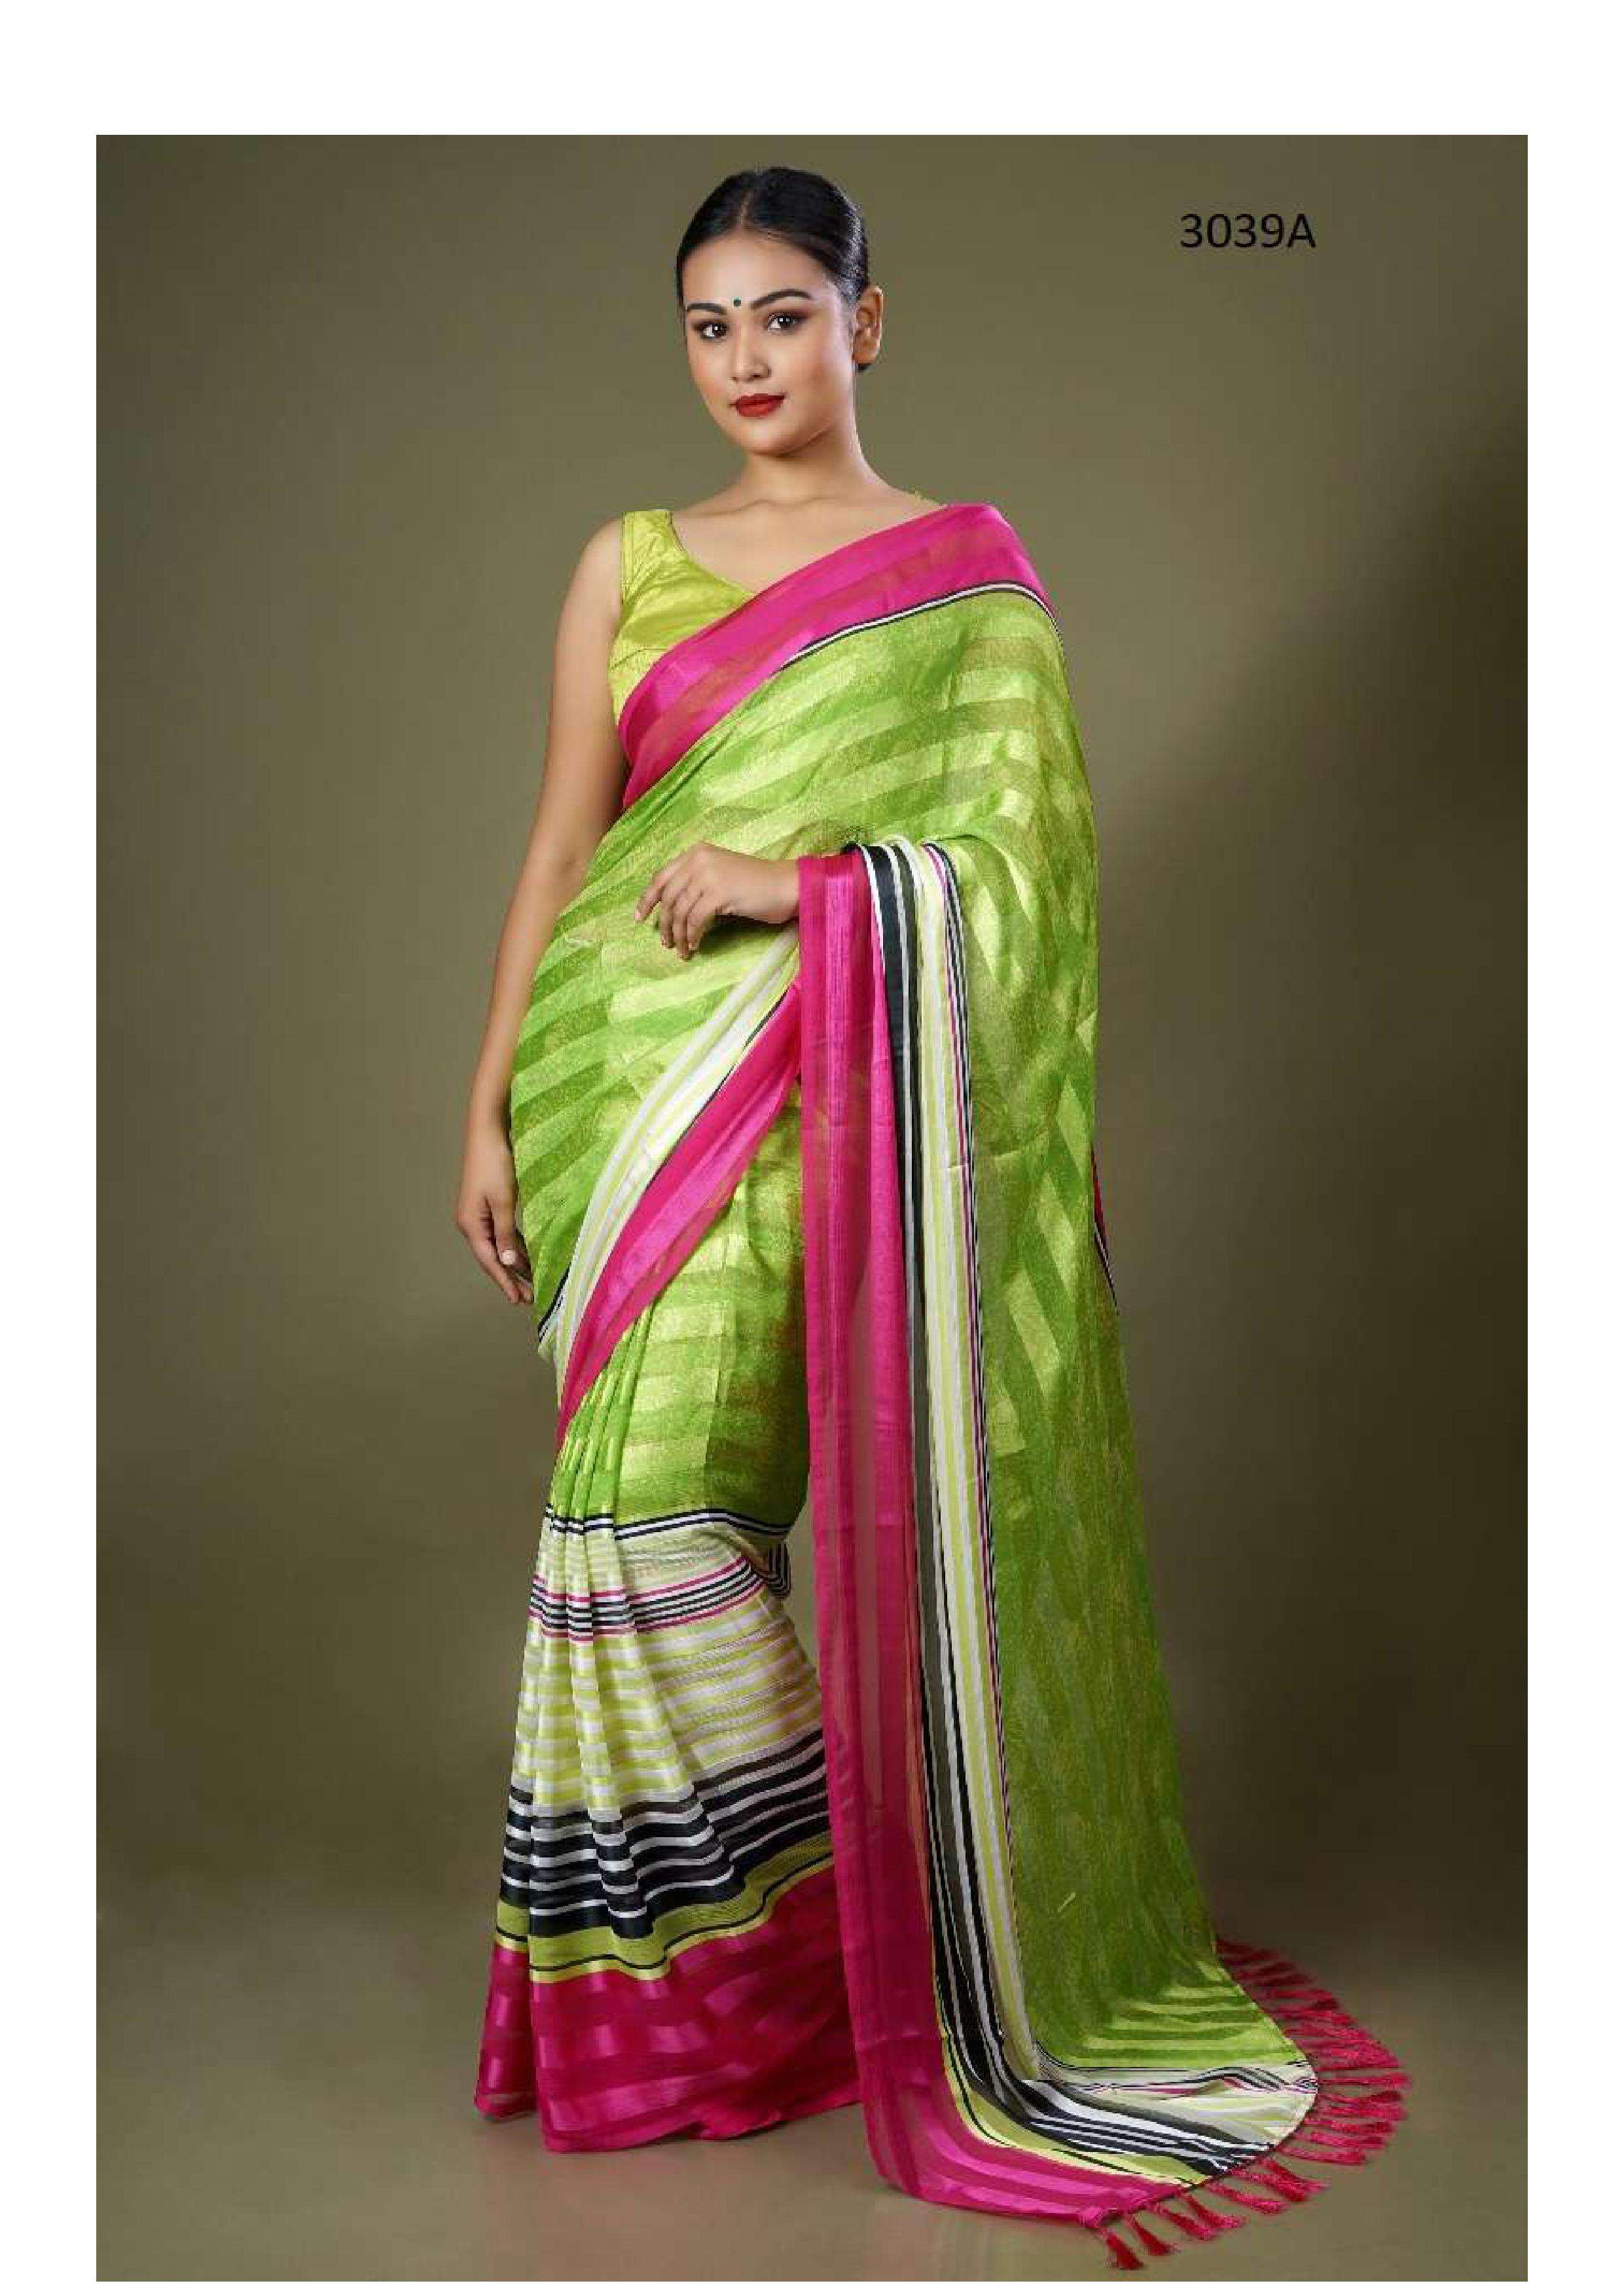 manjula 3039 design colors chiffon satin patta fancy saree